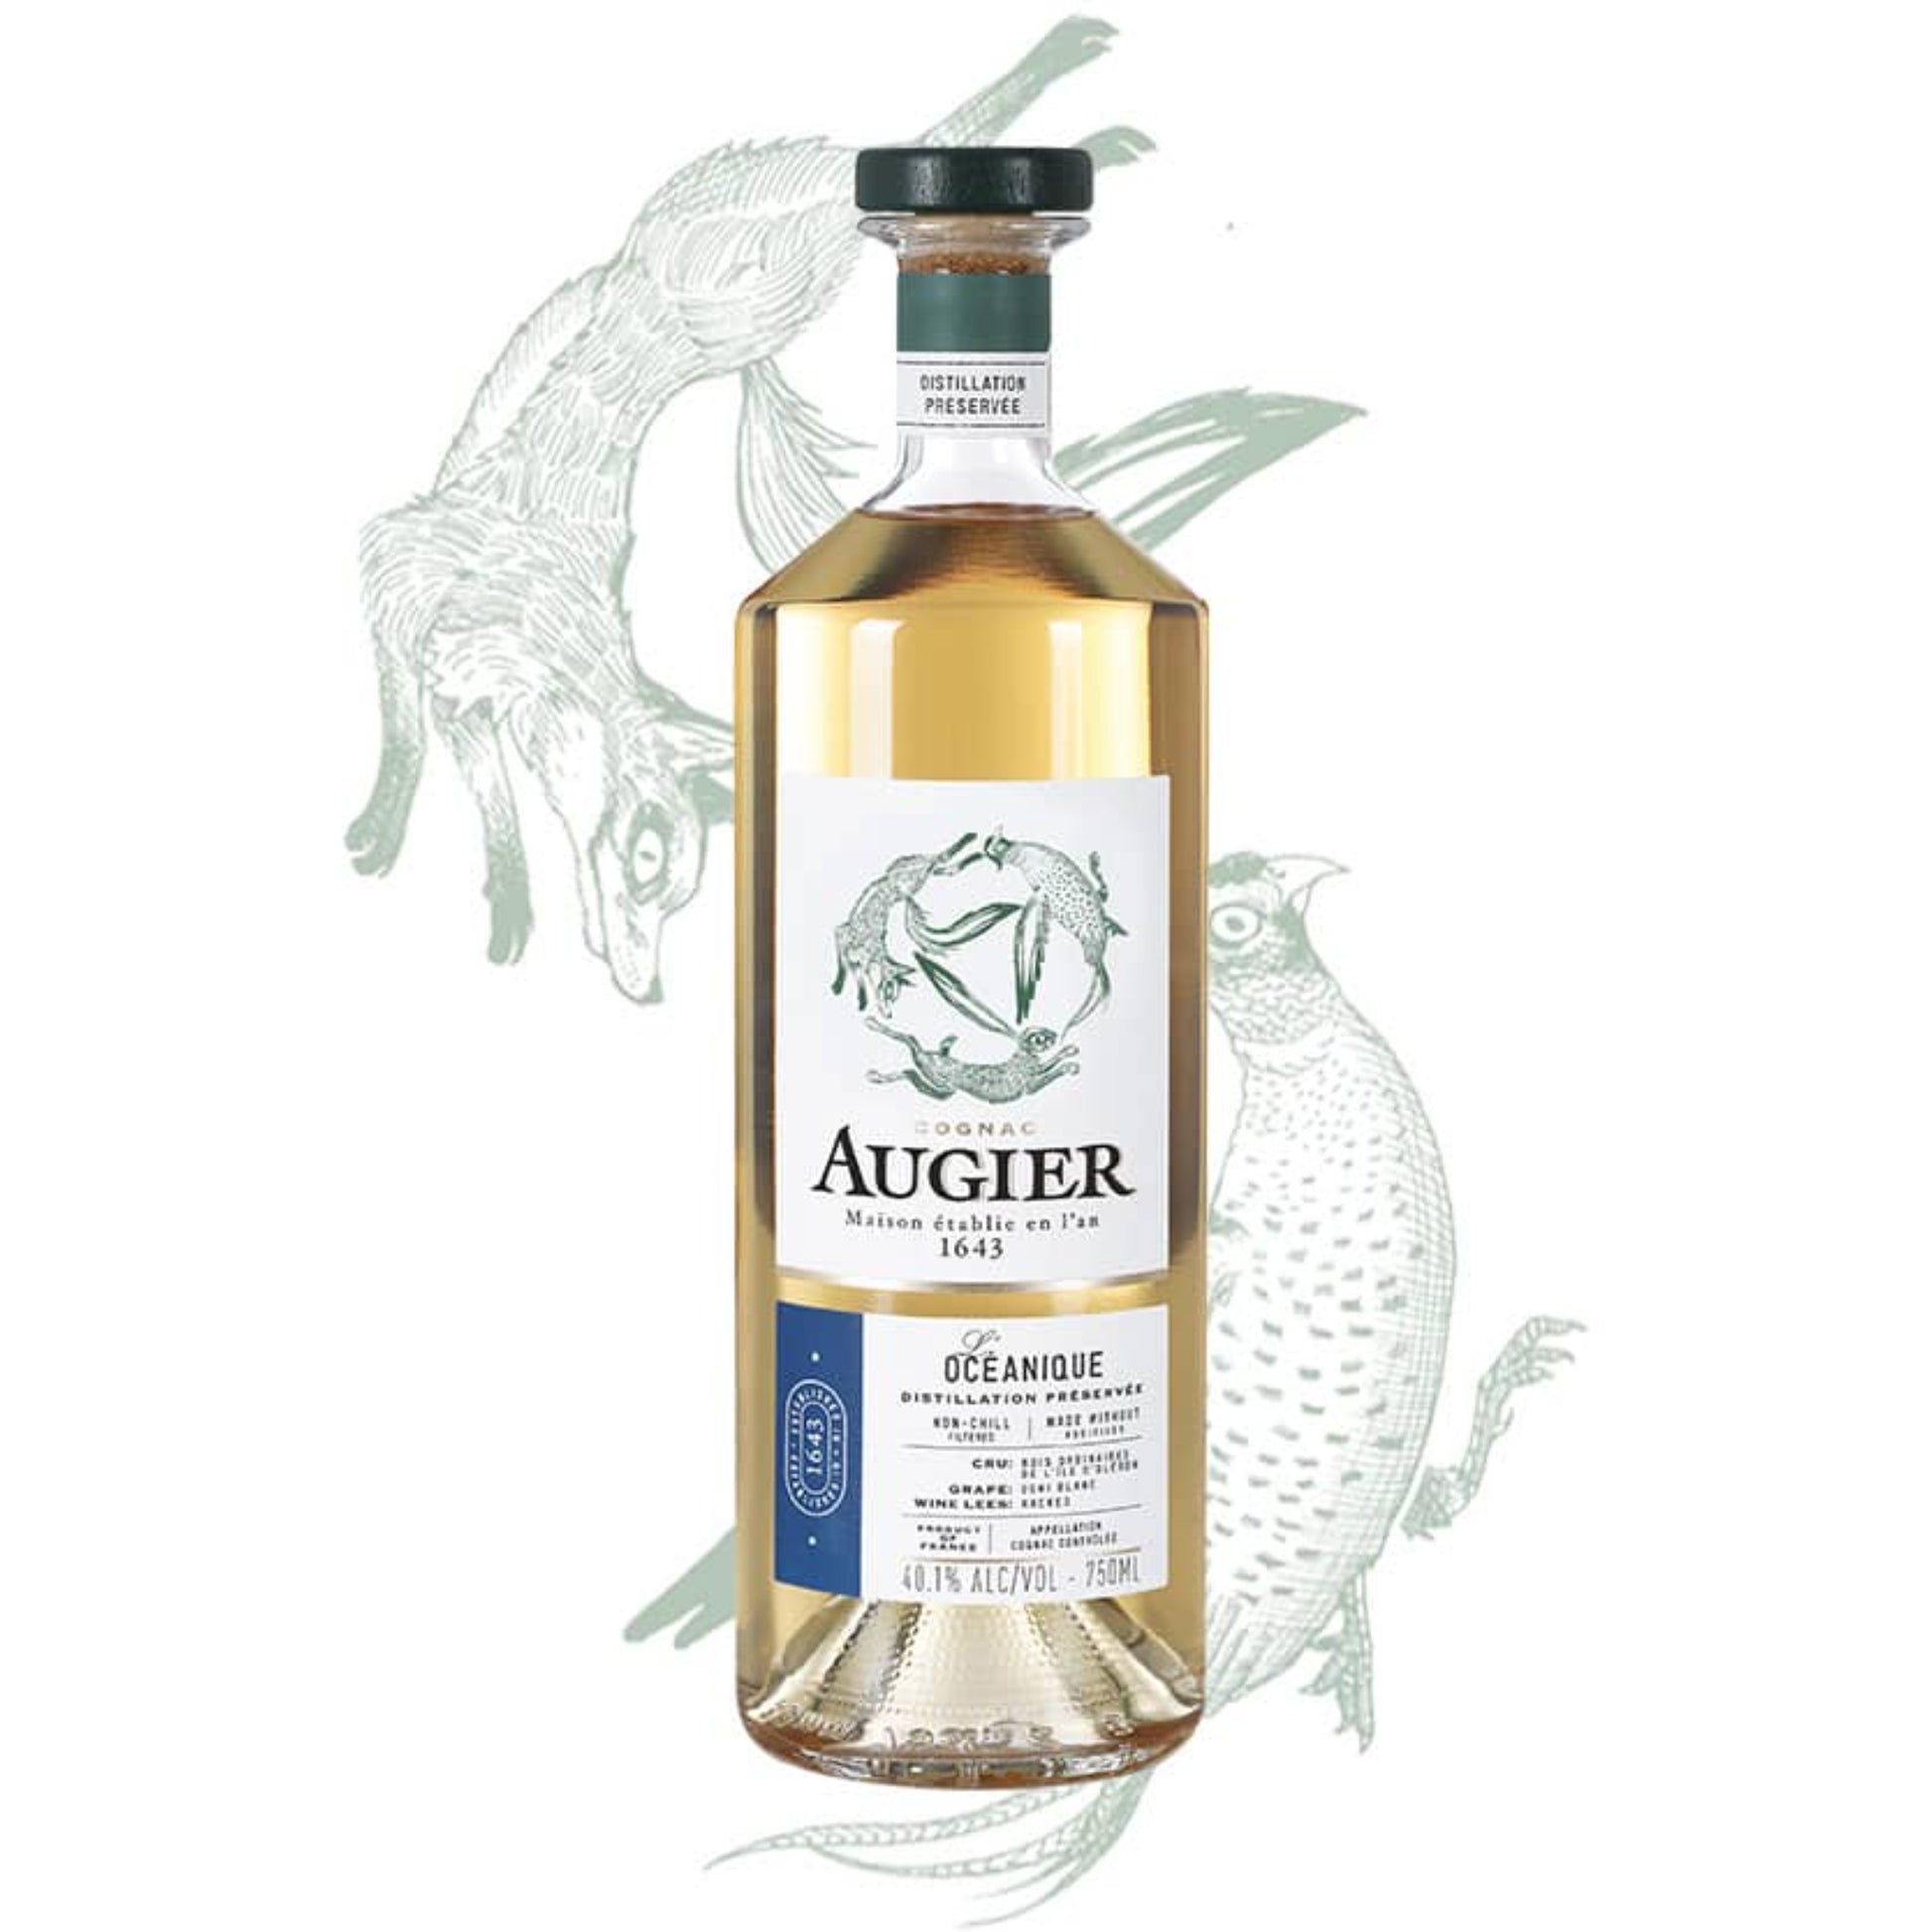 Augier L'Oceanique Cognac - Liquor Geeks